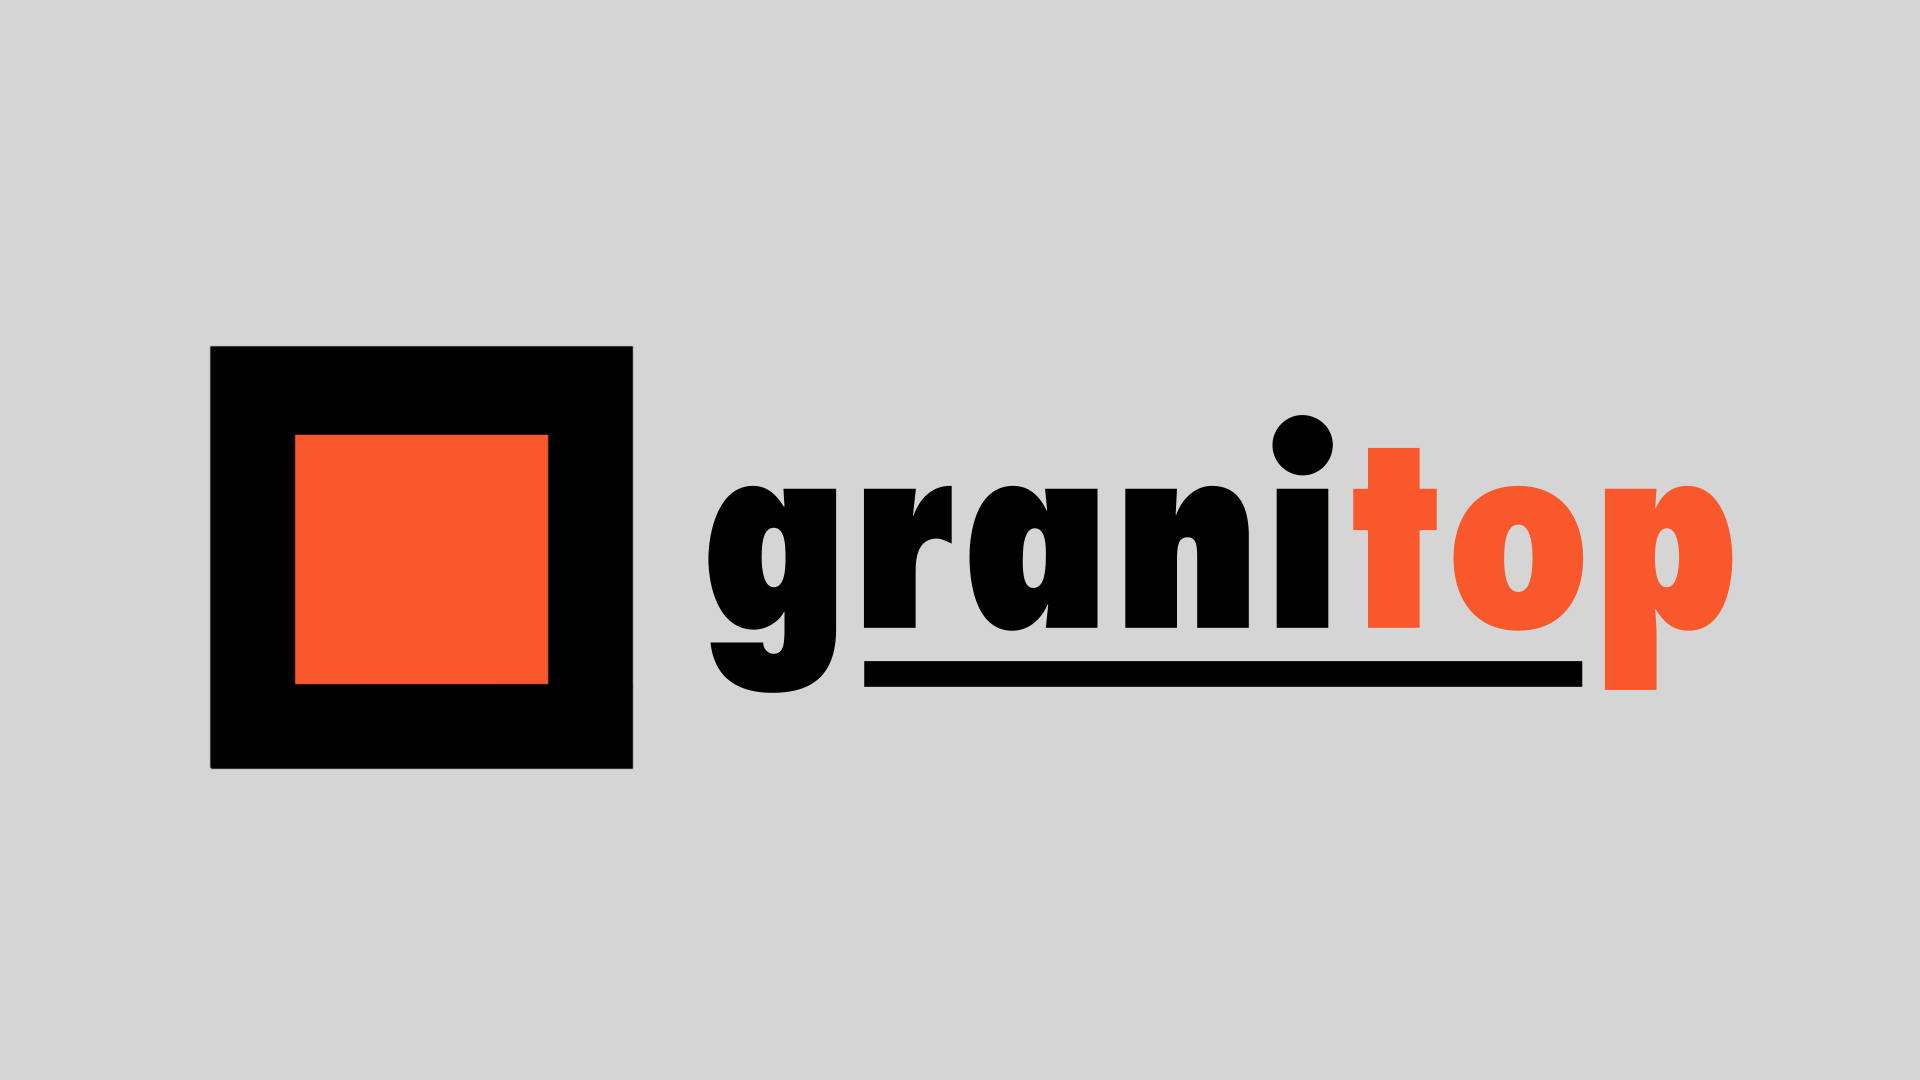 Granitop logo animation